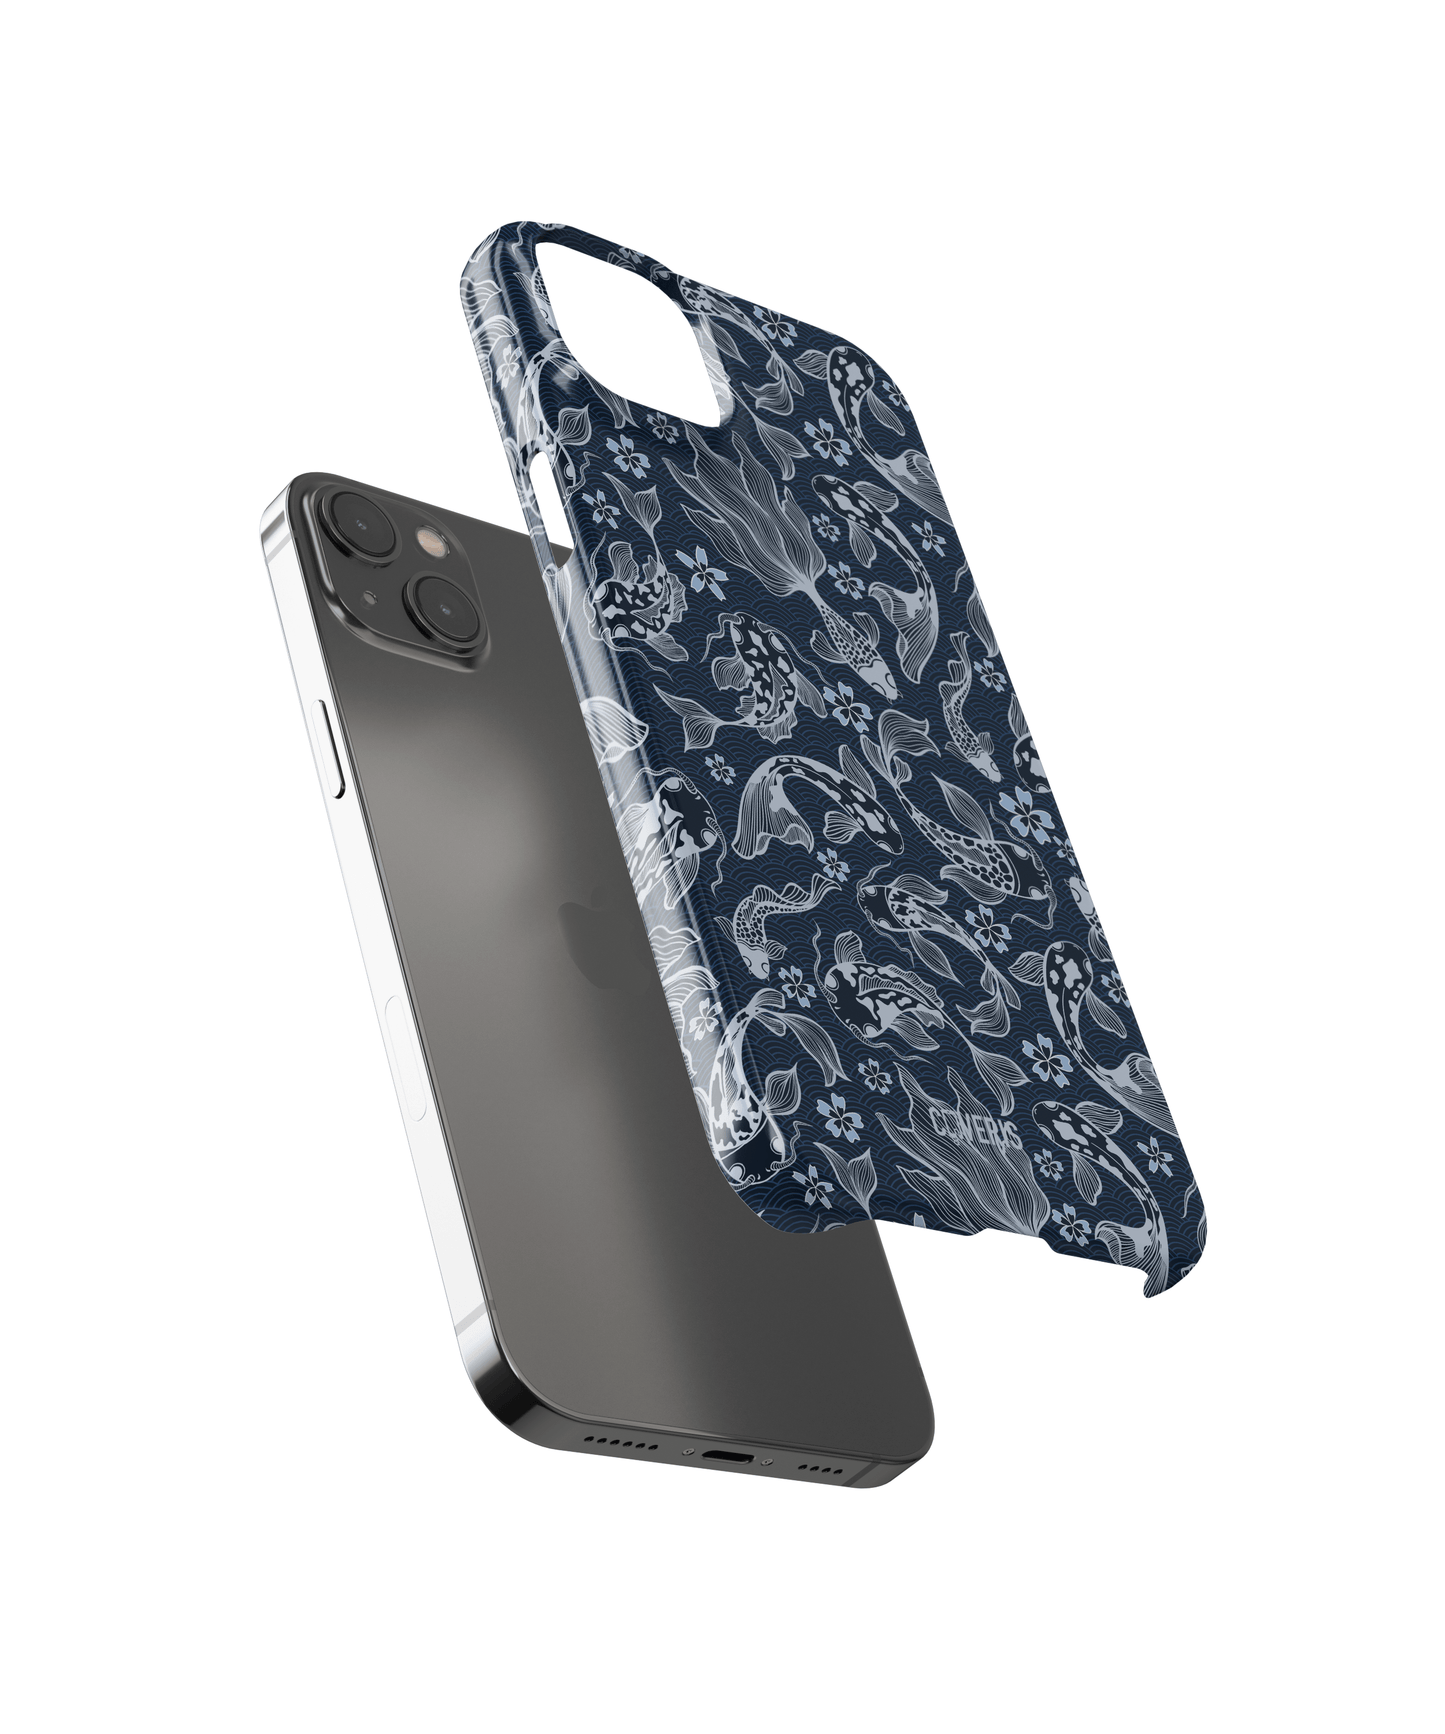 Fishtopia - Samsung Galaxy A50 phone case